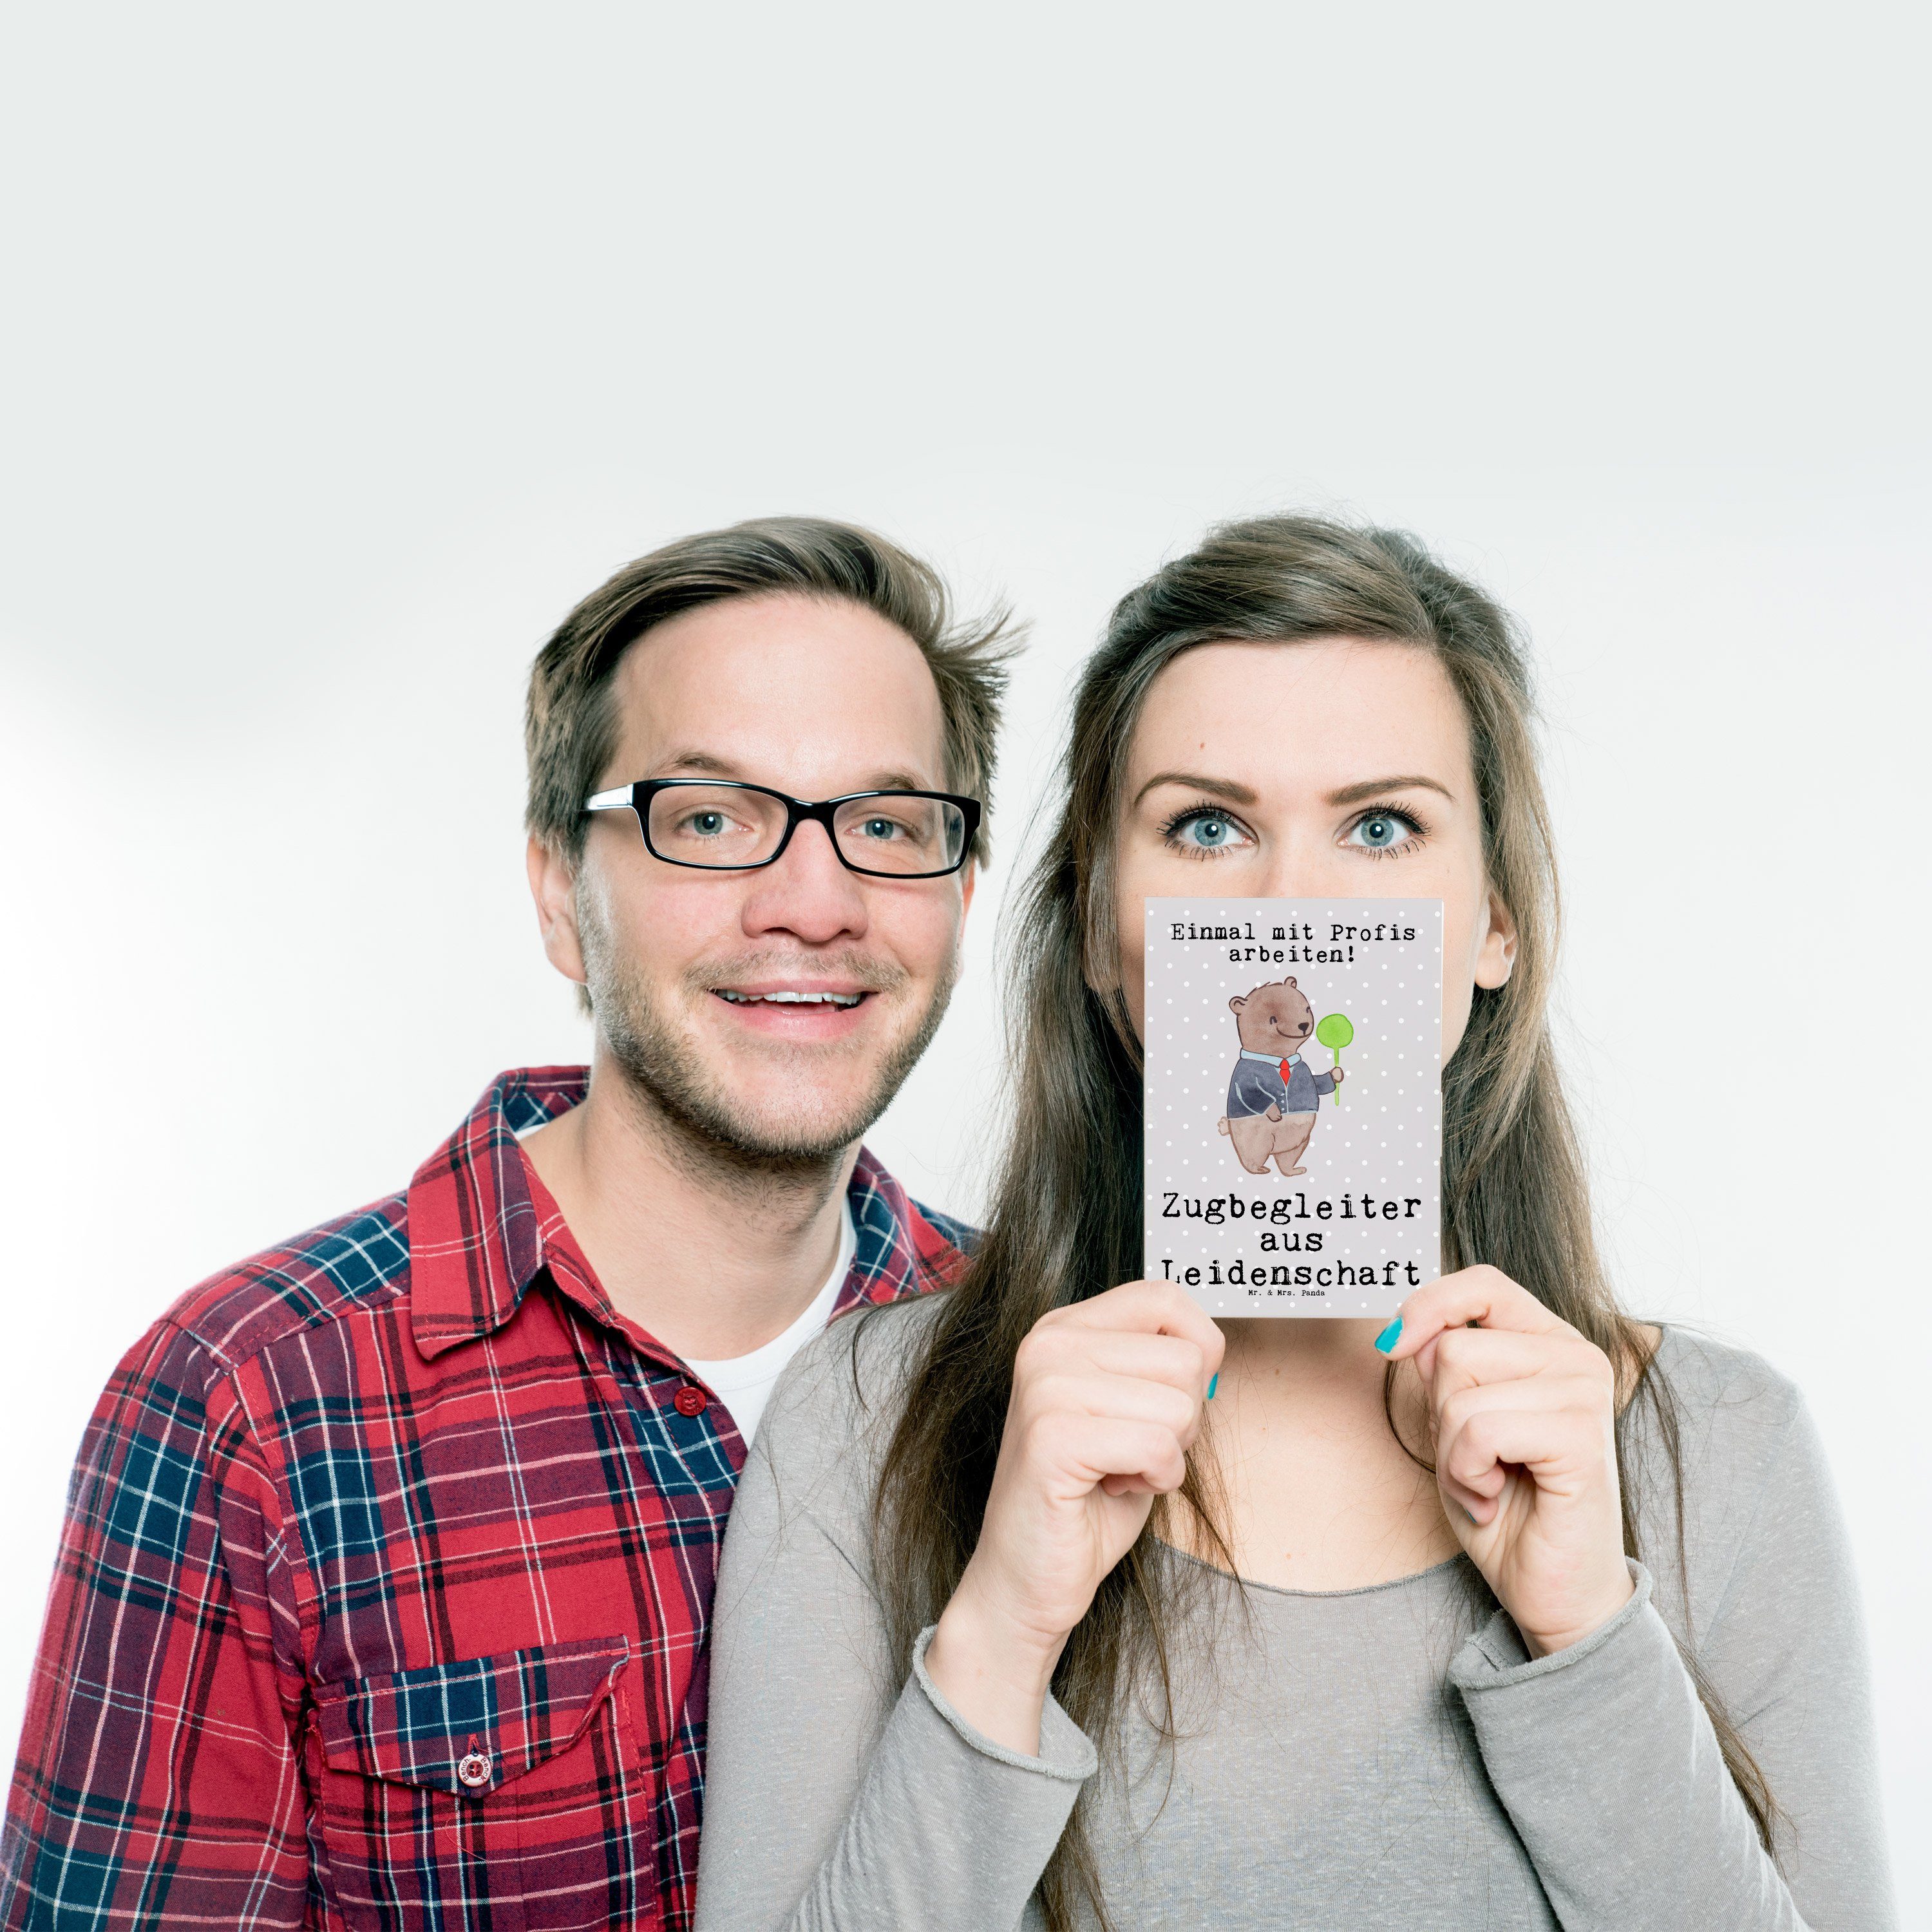 Mr. & Mrs. Panda Geschenk, aus - Pastell Leidenschaft Zugbegleiter Dankeschön - Postkarte Grau